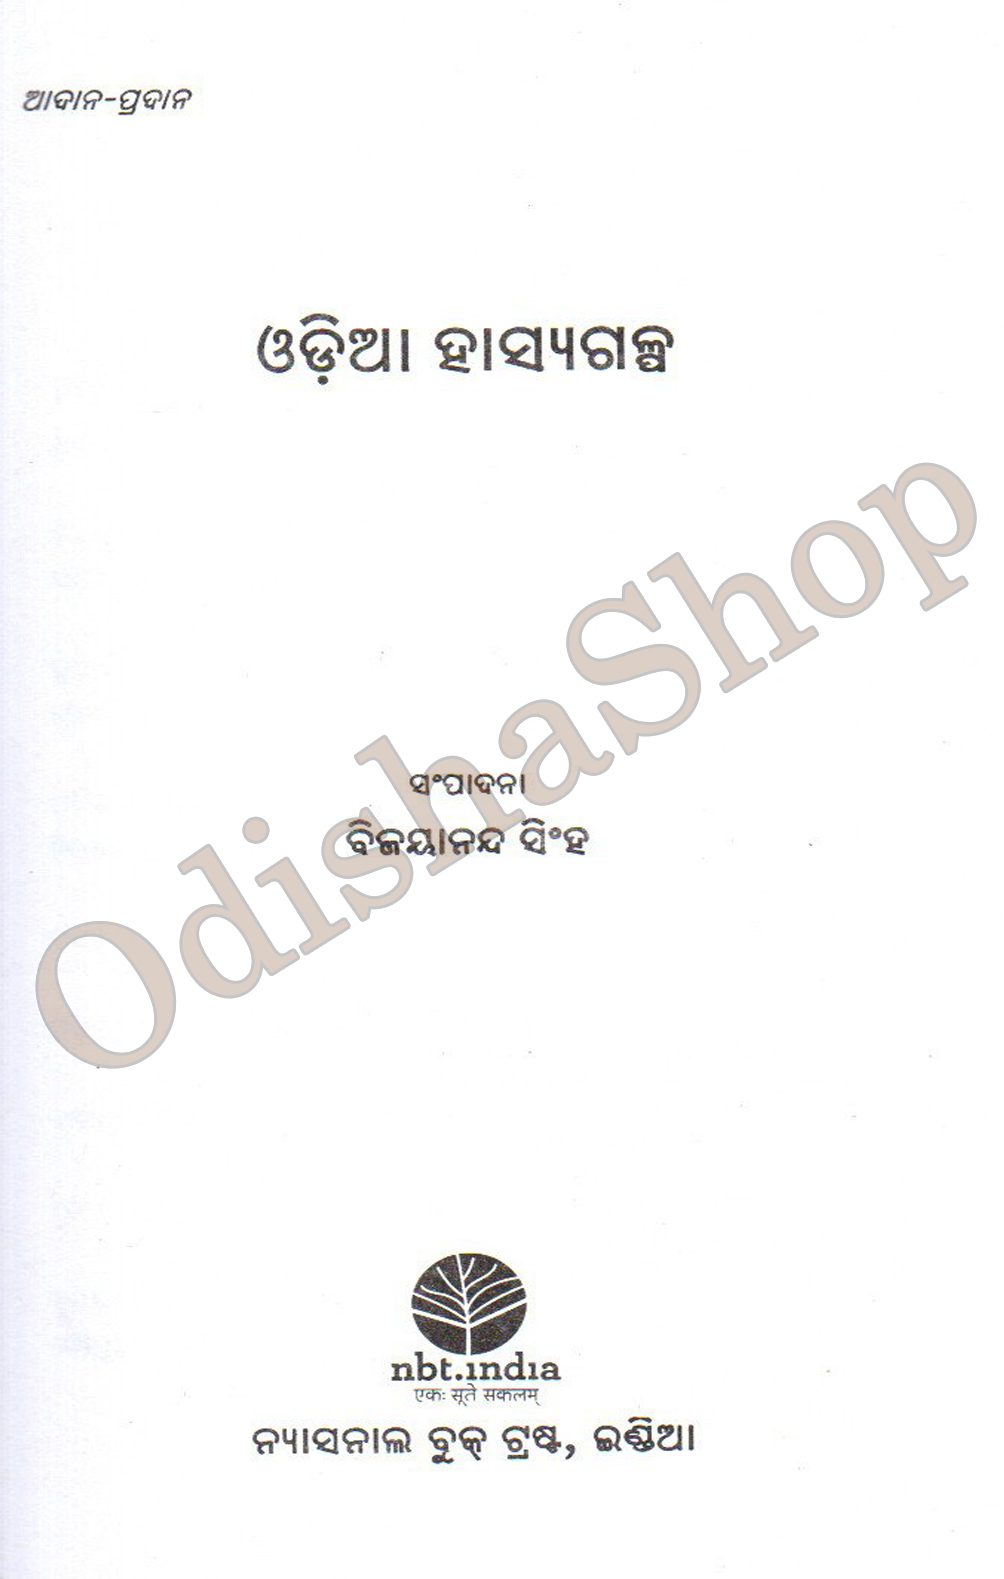 Odia Book Odia Hasya Galpa Odishashop